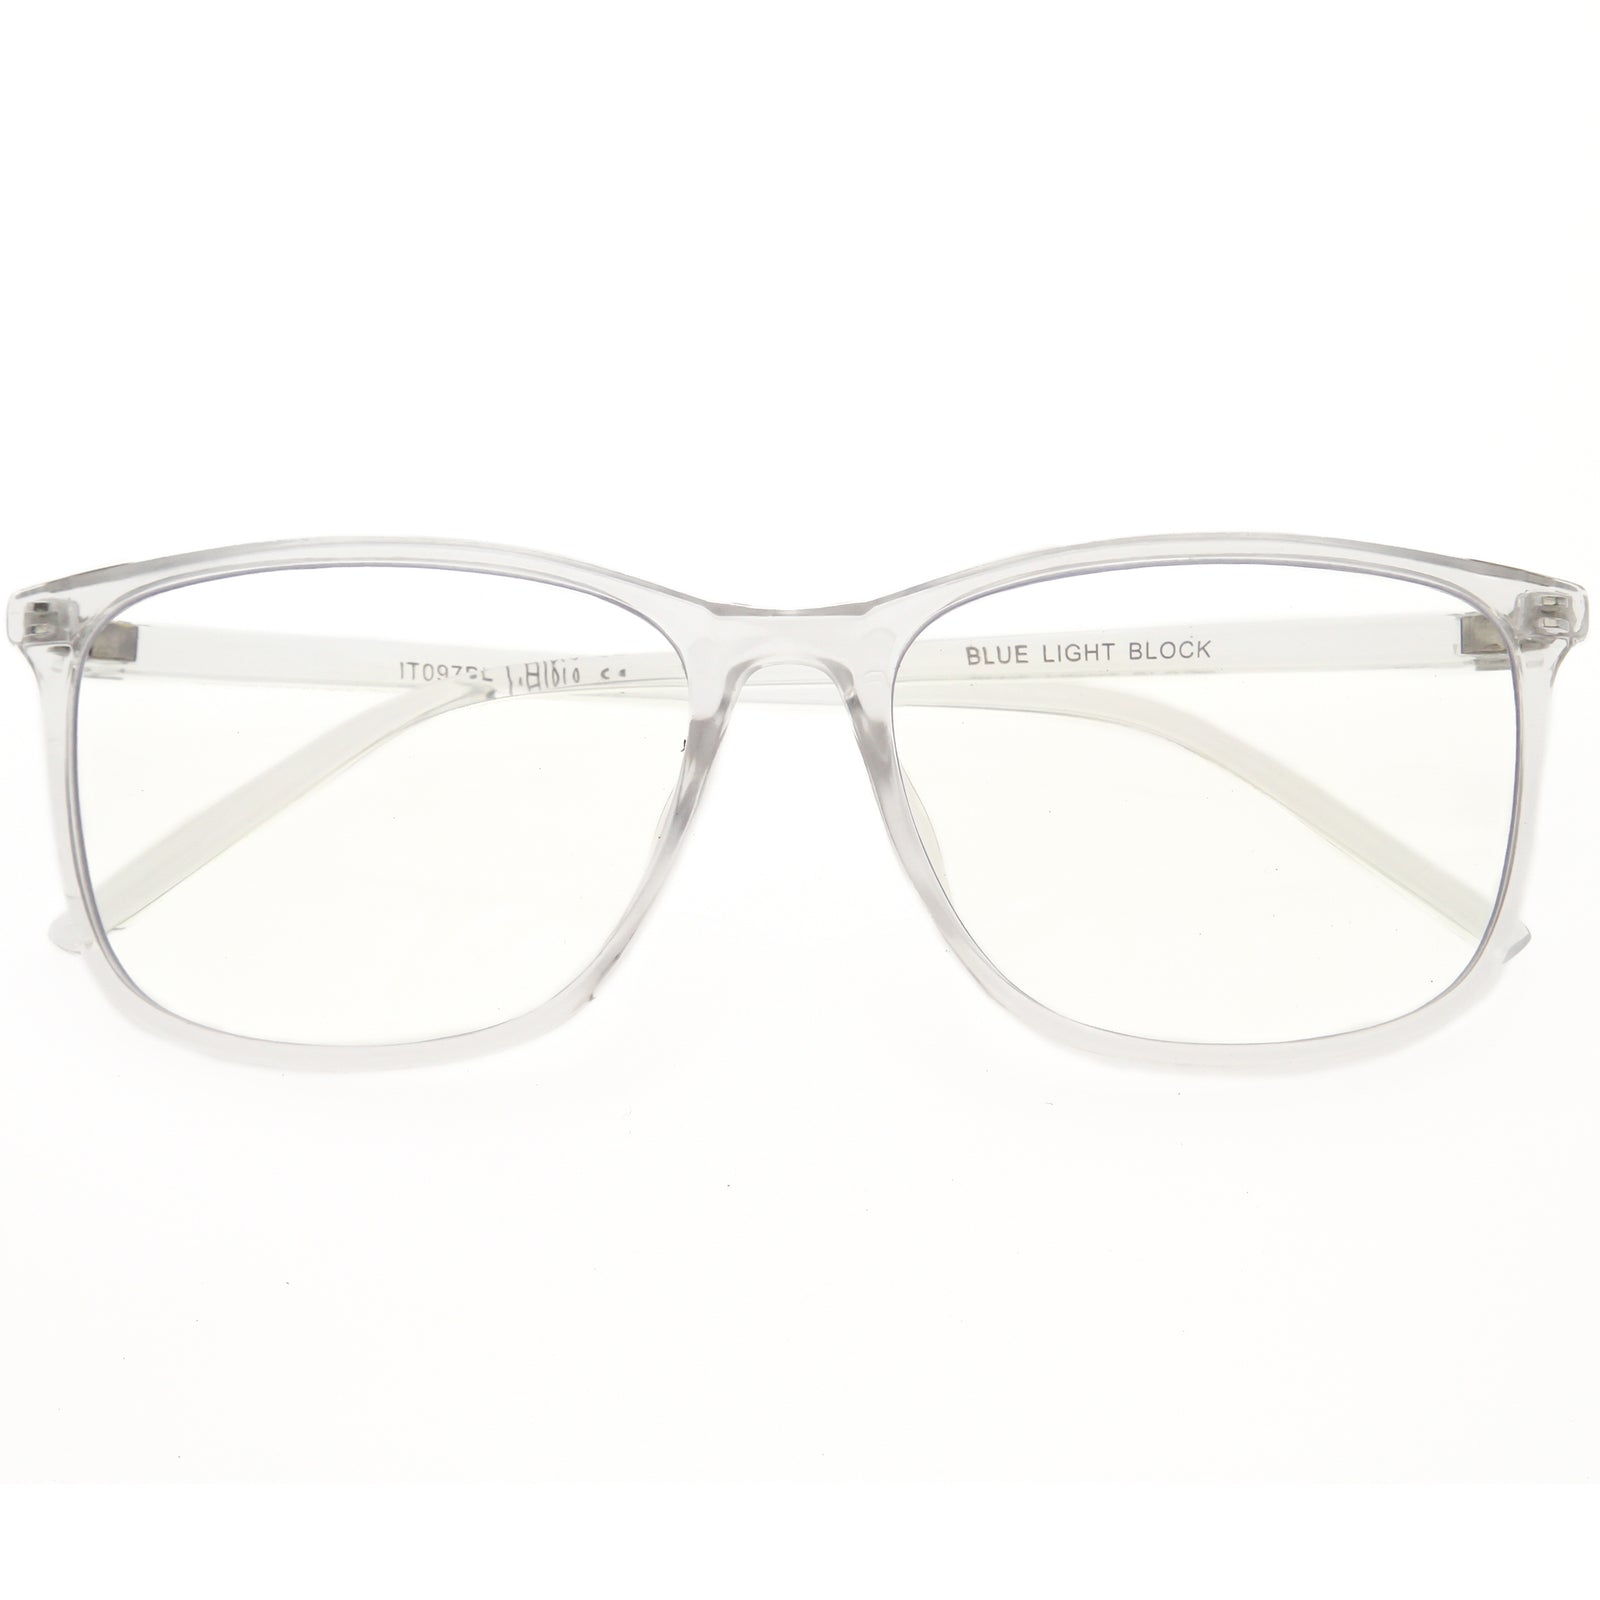 zeroUV - Protective Face Shield Full Cover Visor Glasses/Sunglasses  (Anti-Fog)